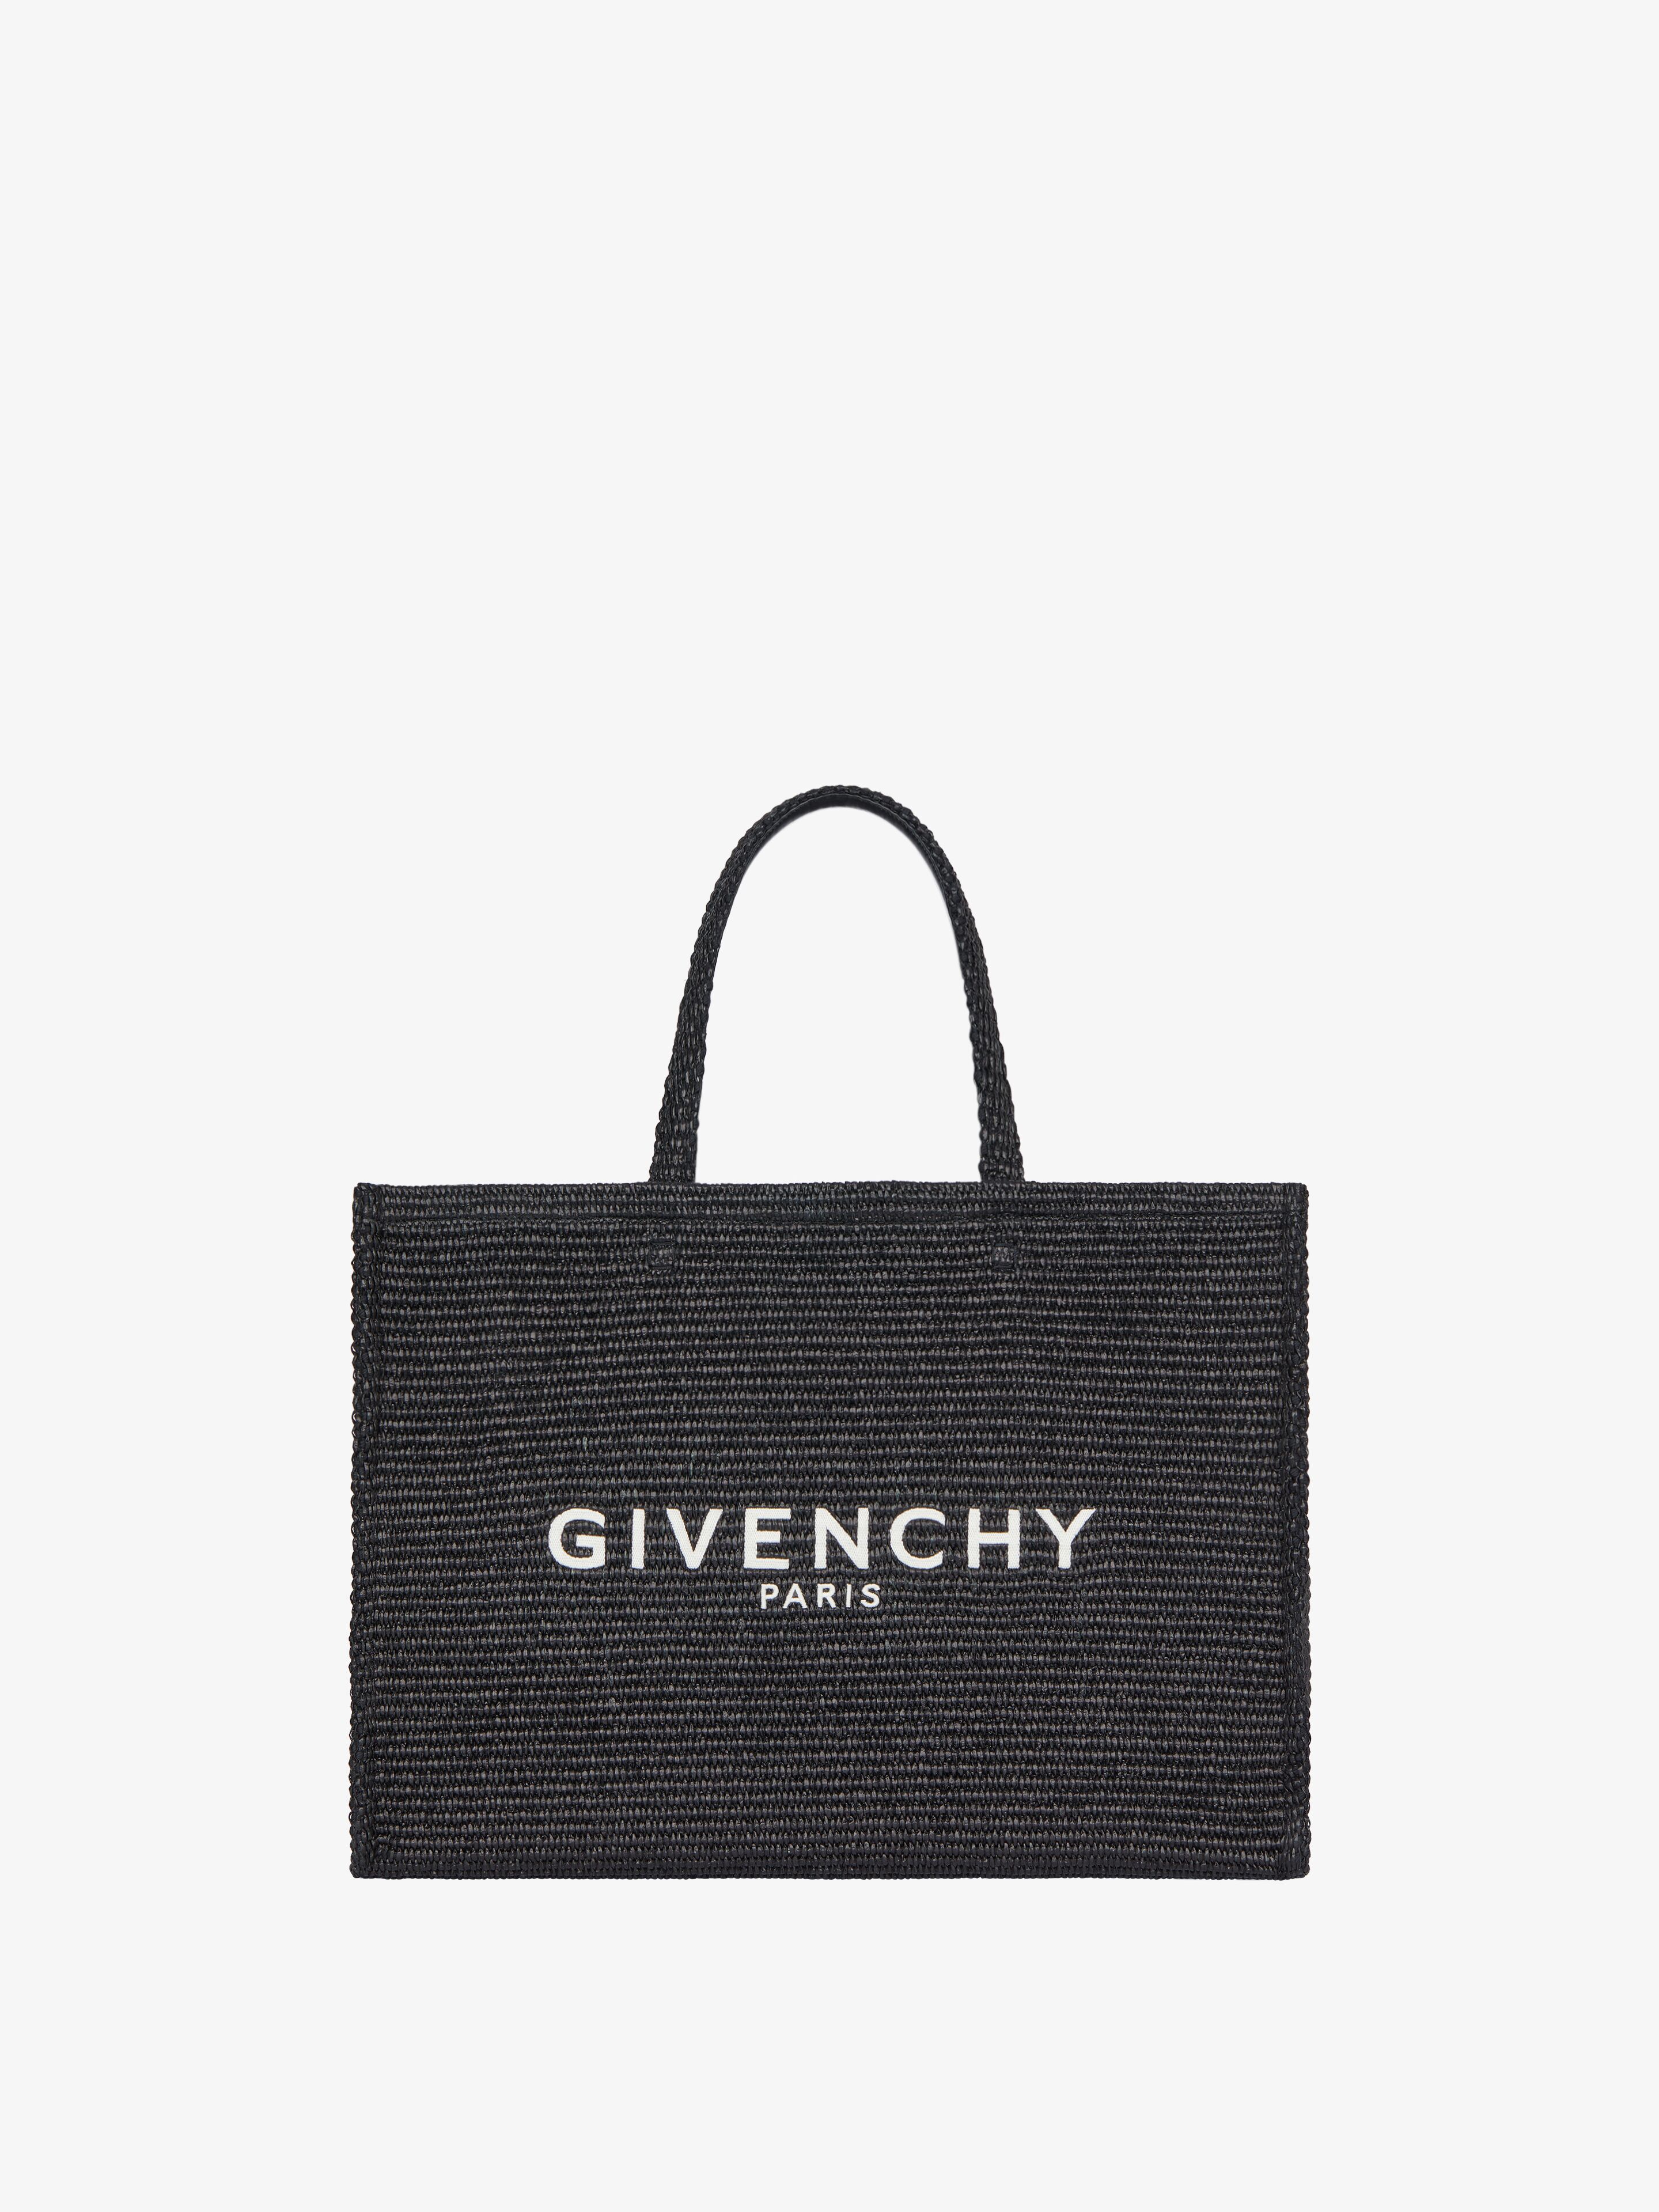 G-Tote | Givenchy